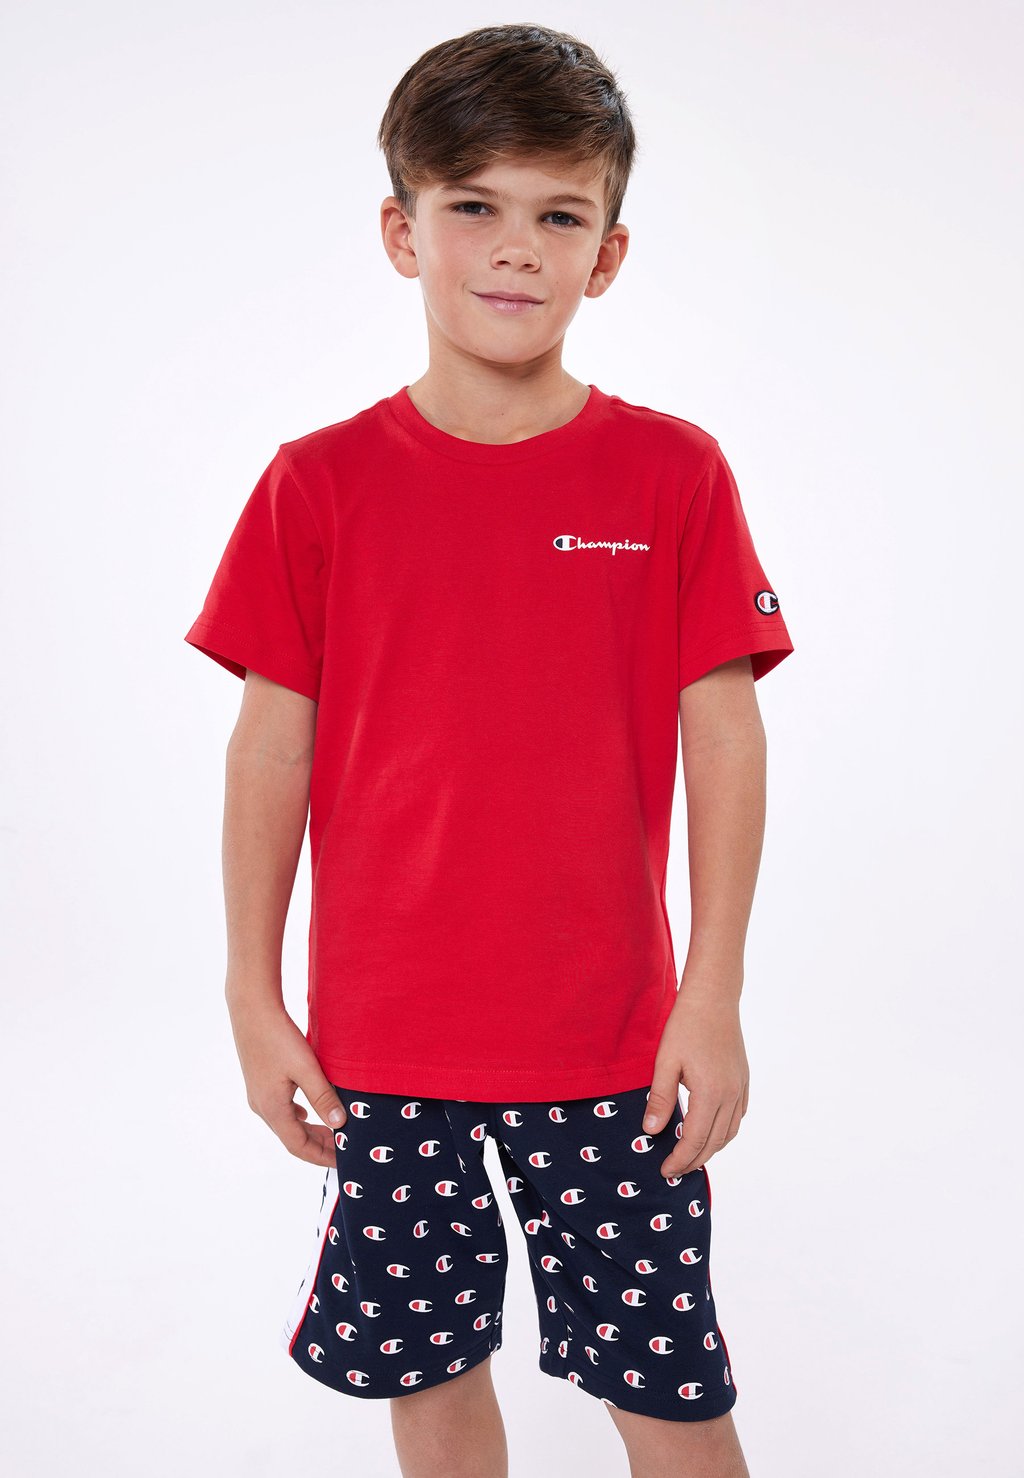 Базовая футболка ICONS CREWNECK SMALL LOGO Champion, цвет red